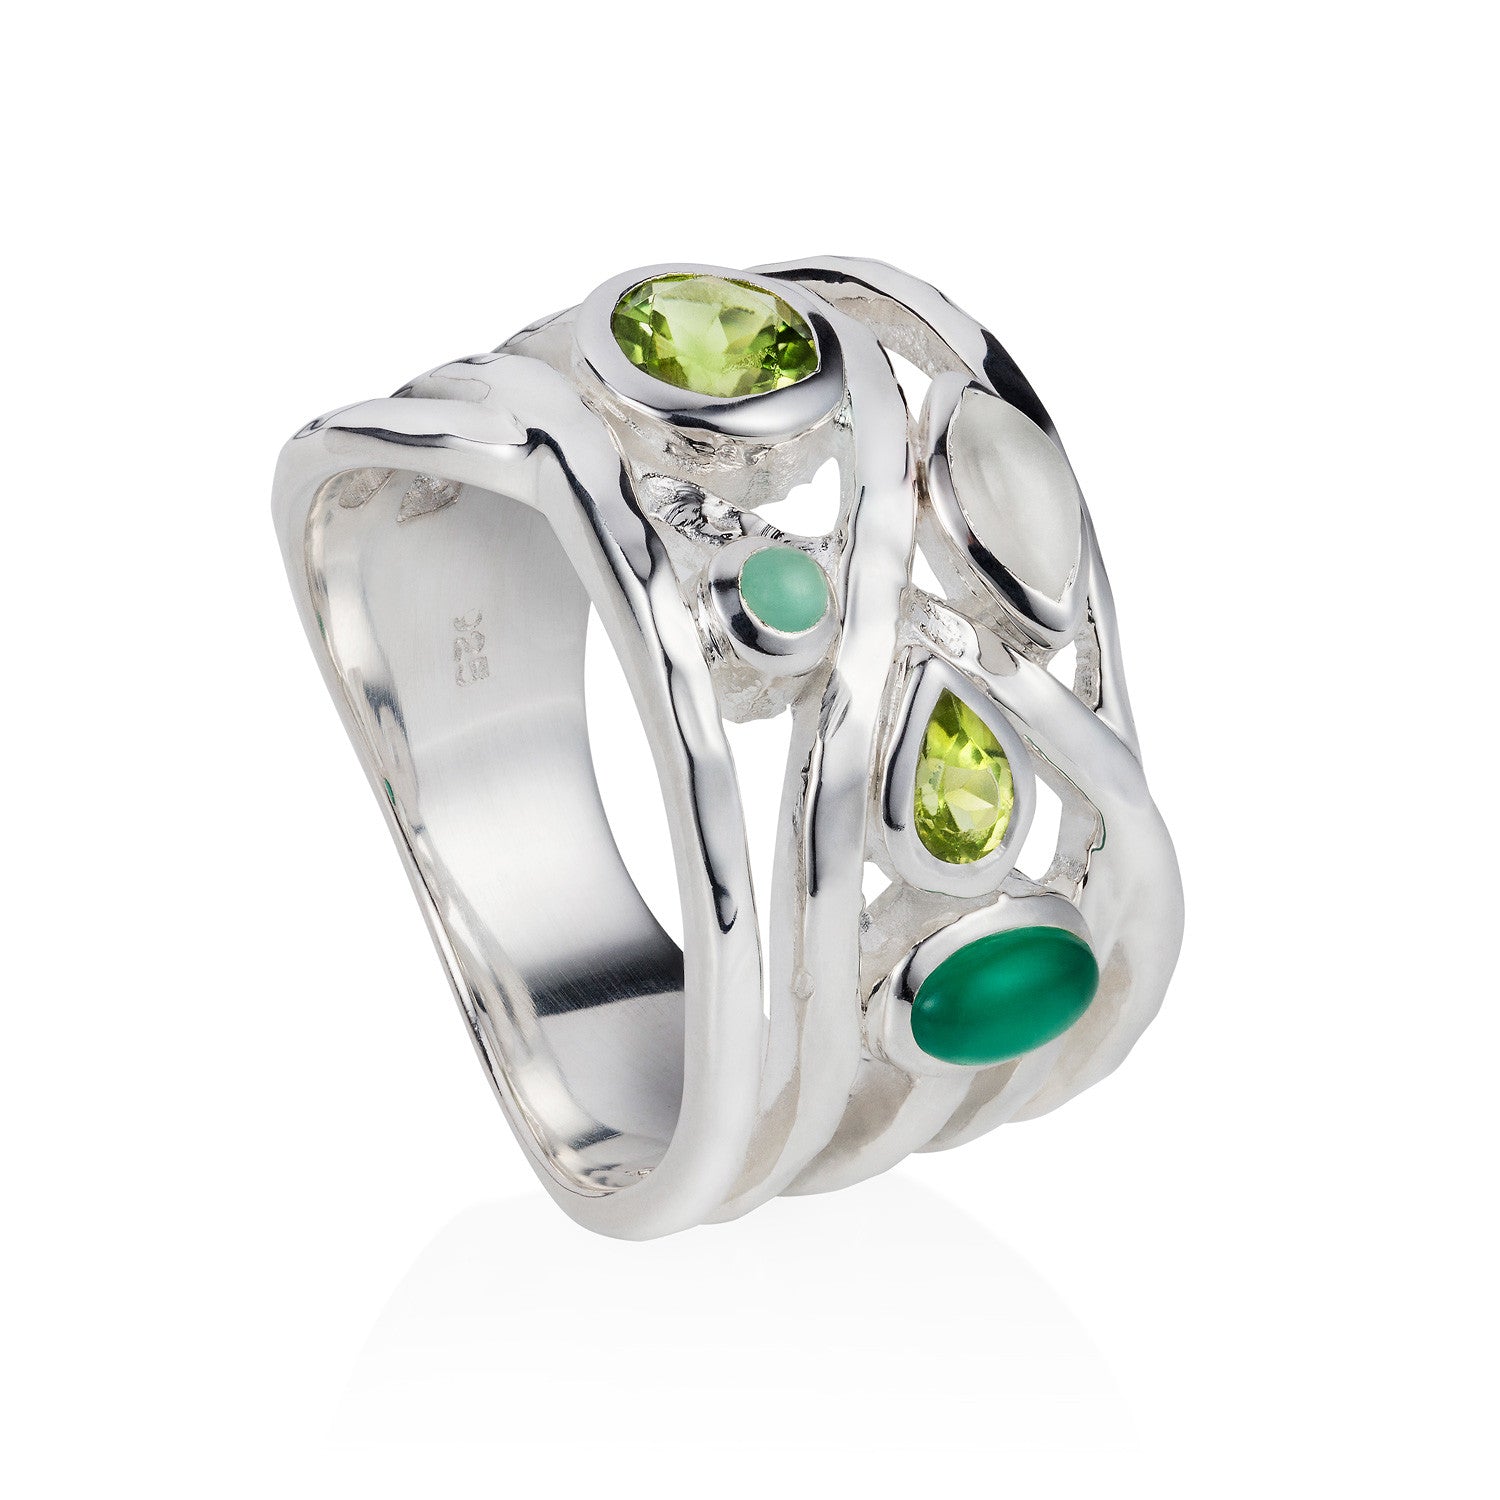 Silver, cocktail ring, Green Amethyst, Green Onyx, Chrysoprase and Peridot, gemstone, geometric, unique British design